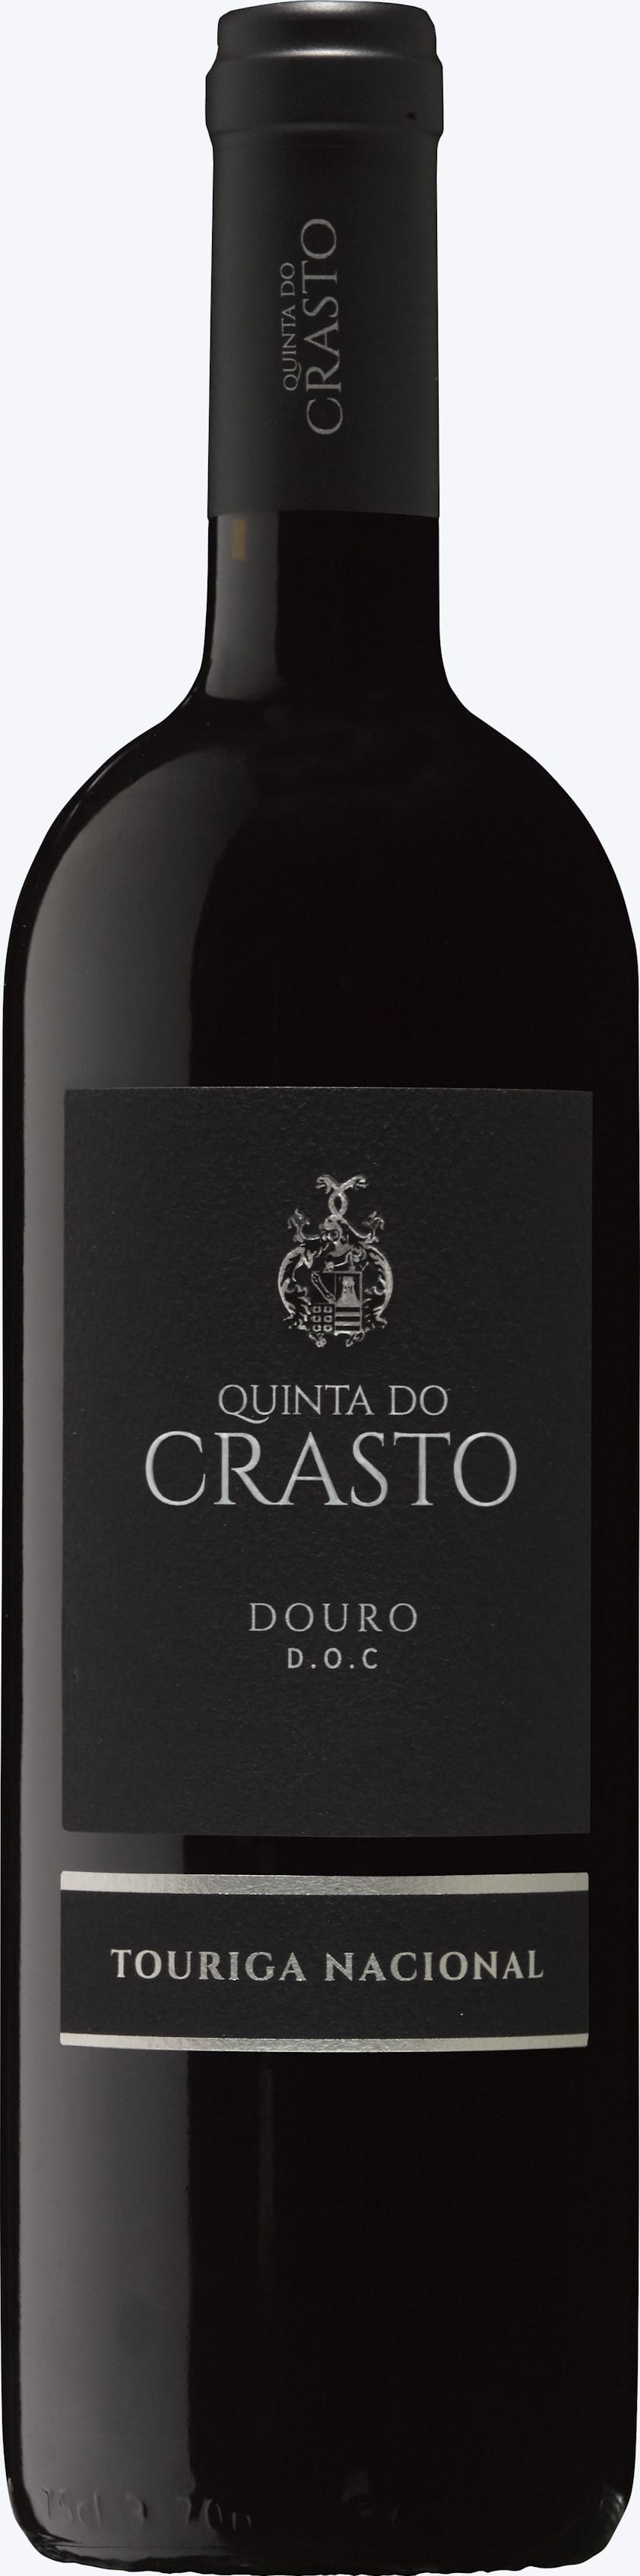 Quinta Do Crasto Touriga Nacional 2019 75cl - Buy Quinta Do Crasto Wines from GREAT WINES DIRECT wine shop